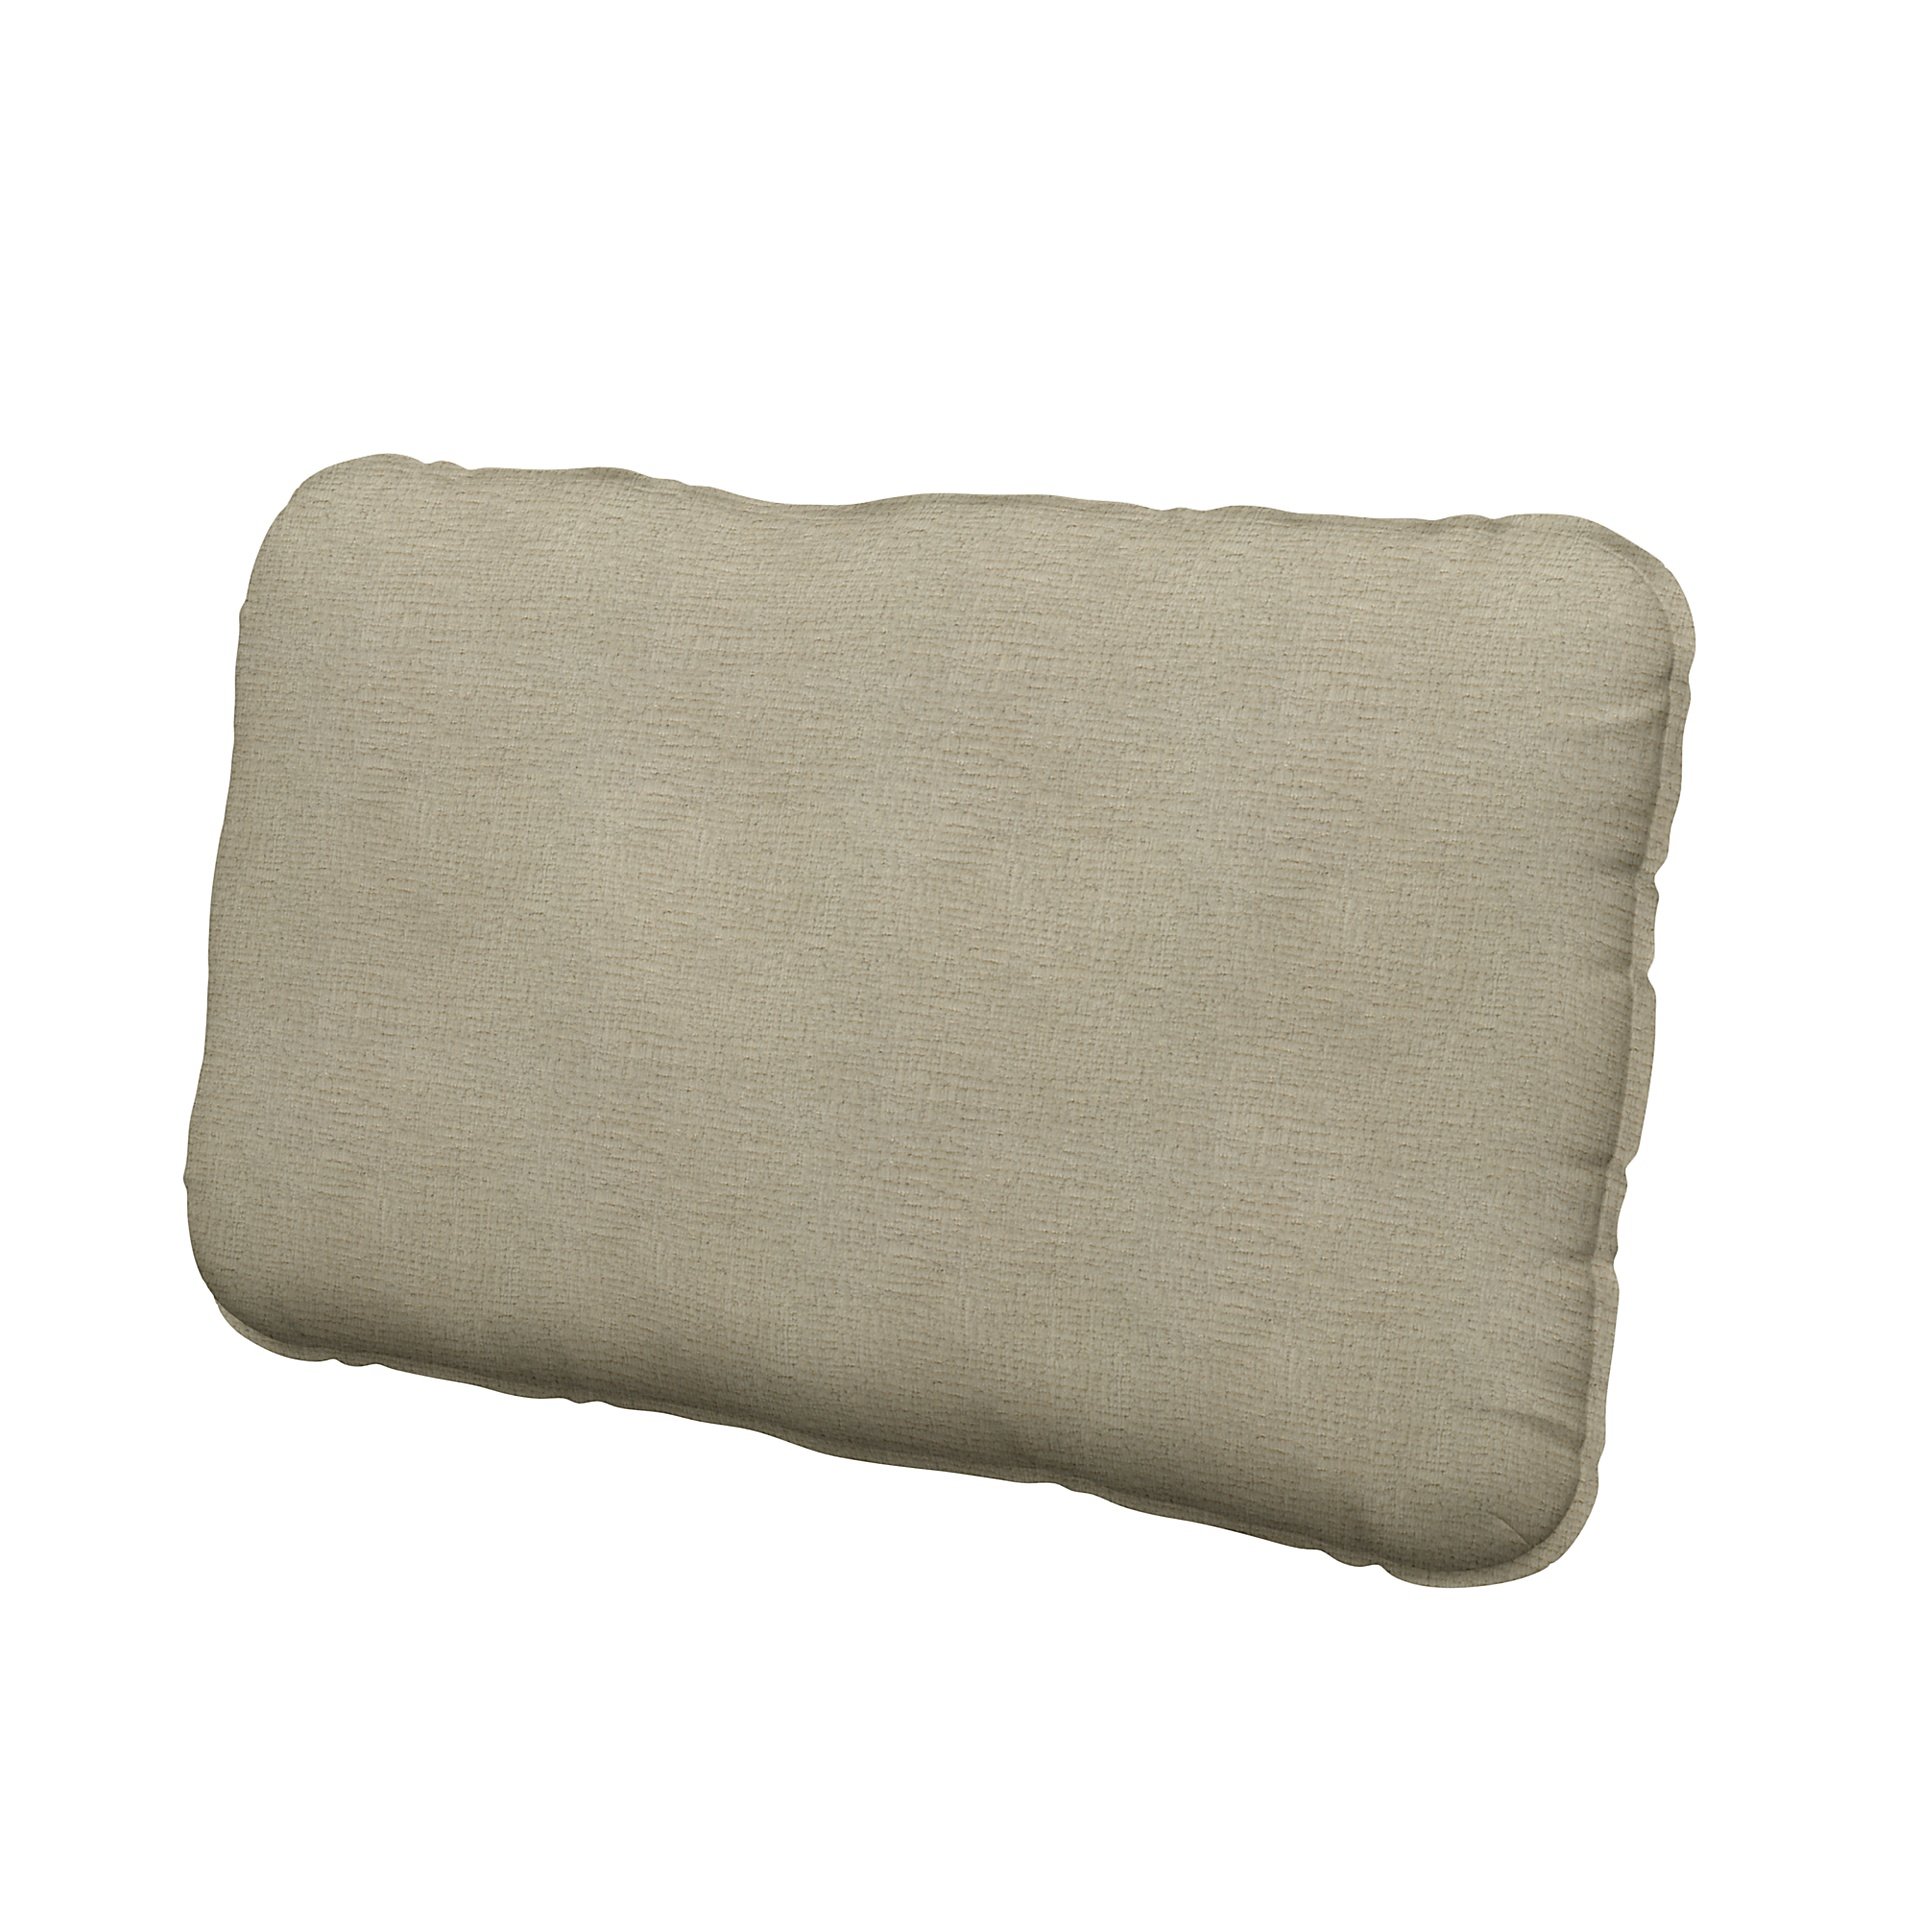 IKEA - Vallentuna back cushion cover 40x75cm, Soft White, Boucle & Texture - Bemz